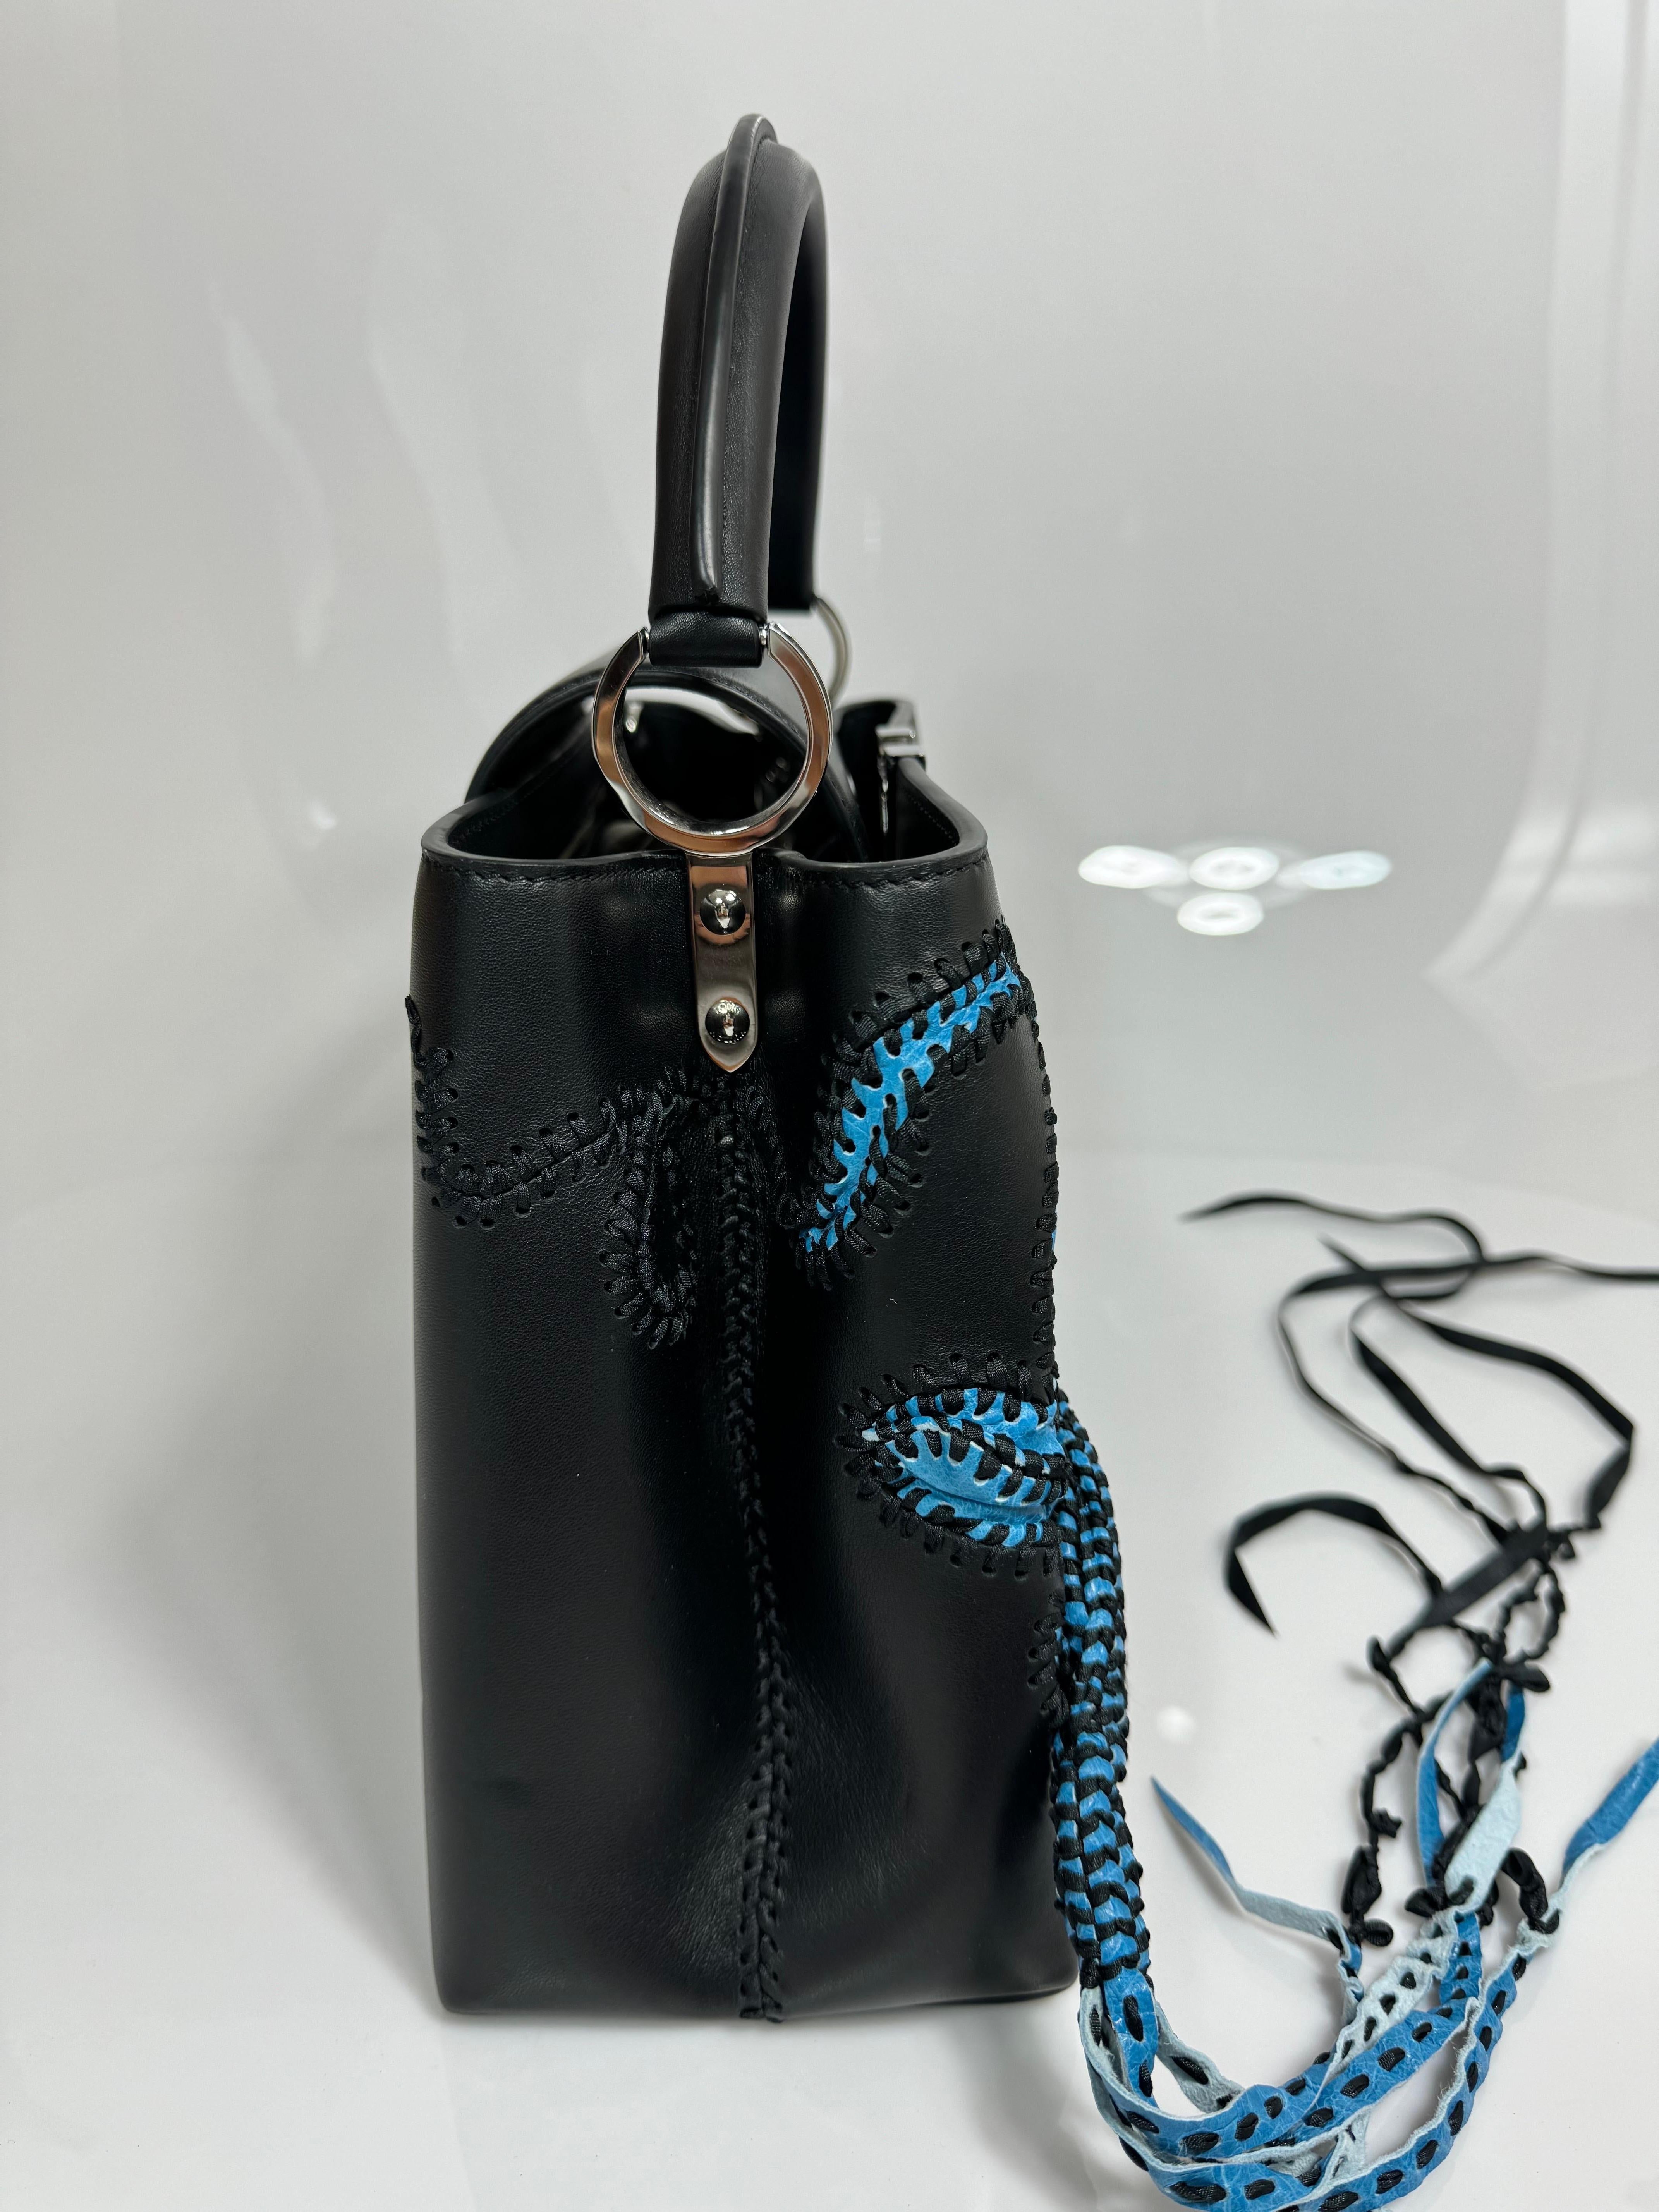 Louis Vuitton Limited Edition Nicholas Hlobo's Artycapucines Handbag-NEW IN BOX For Sale 4